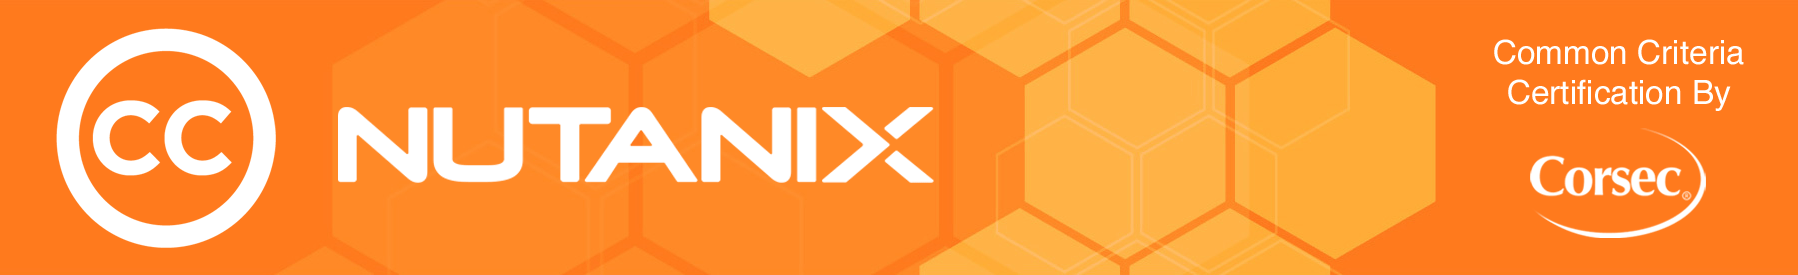 Nutanix CC Banner